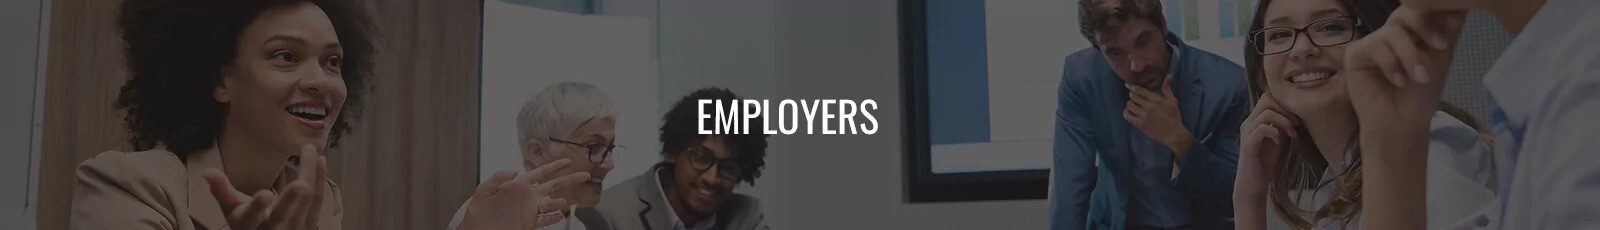 Employers Smiling